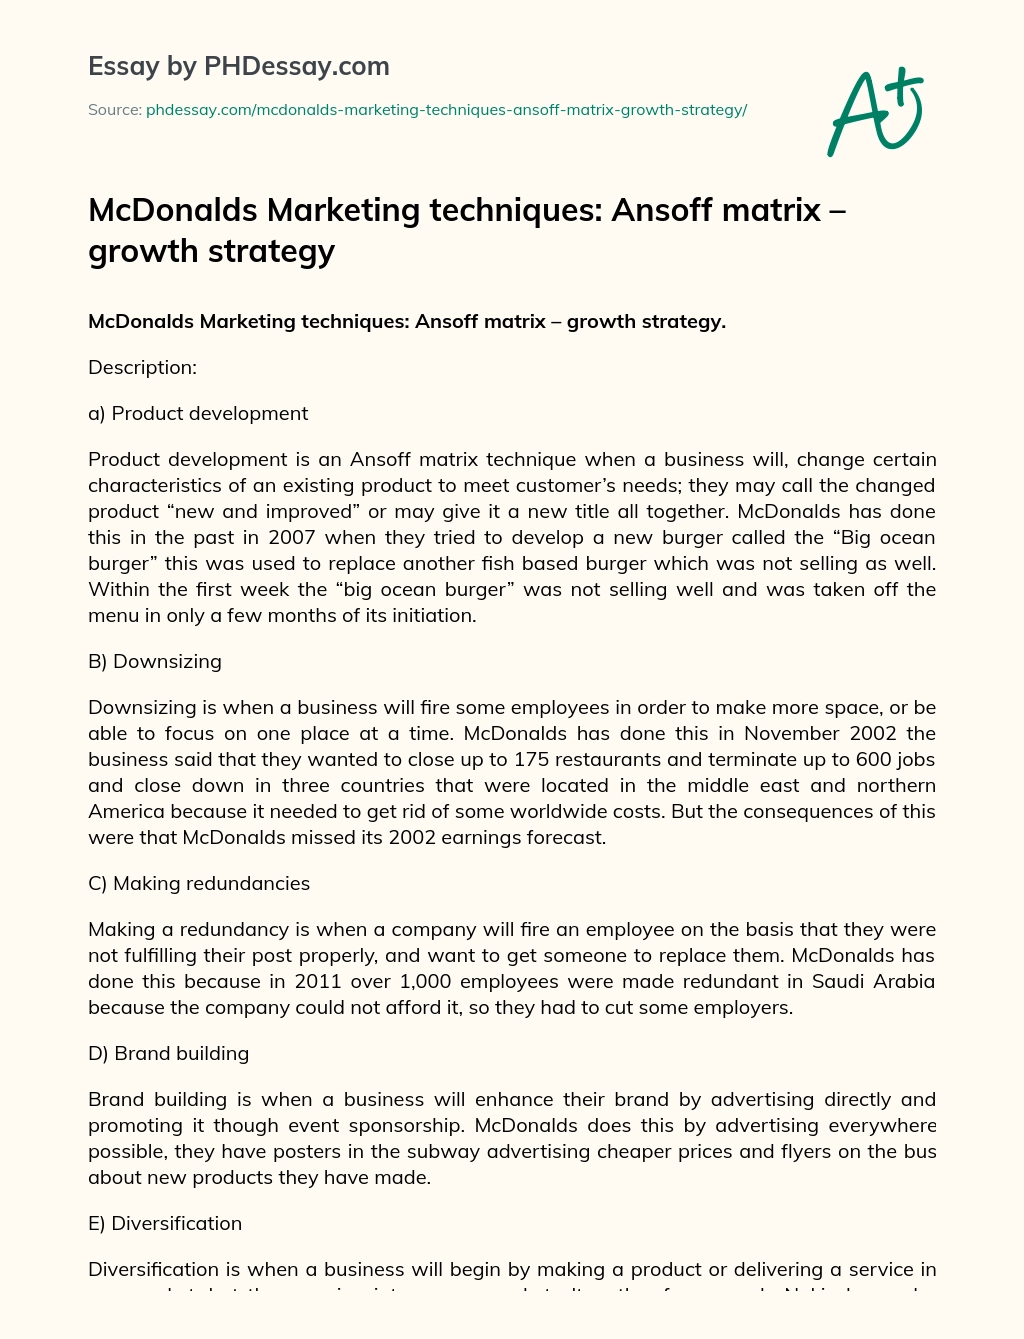 McDonalds Marketing techniques: Ansoff matrix – growth strategy essay